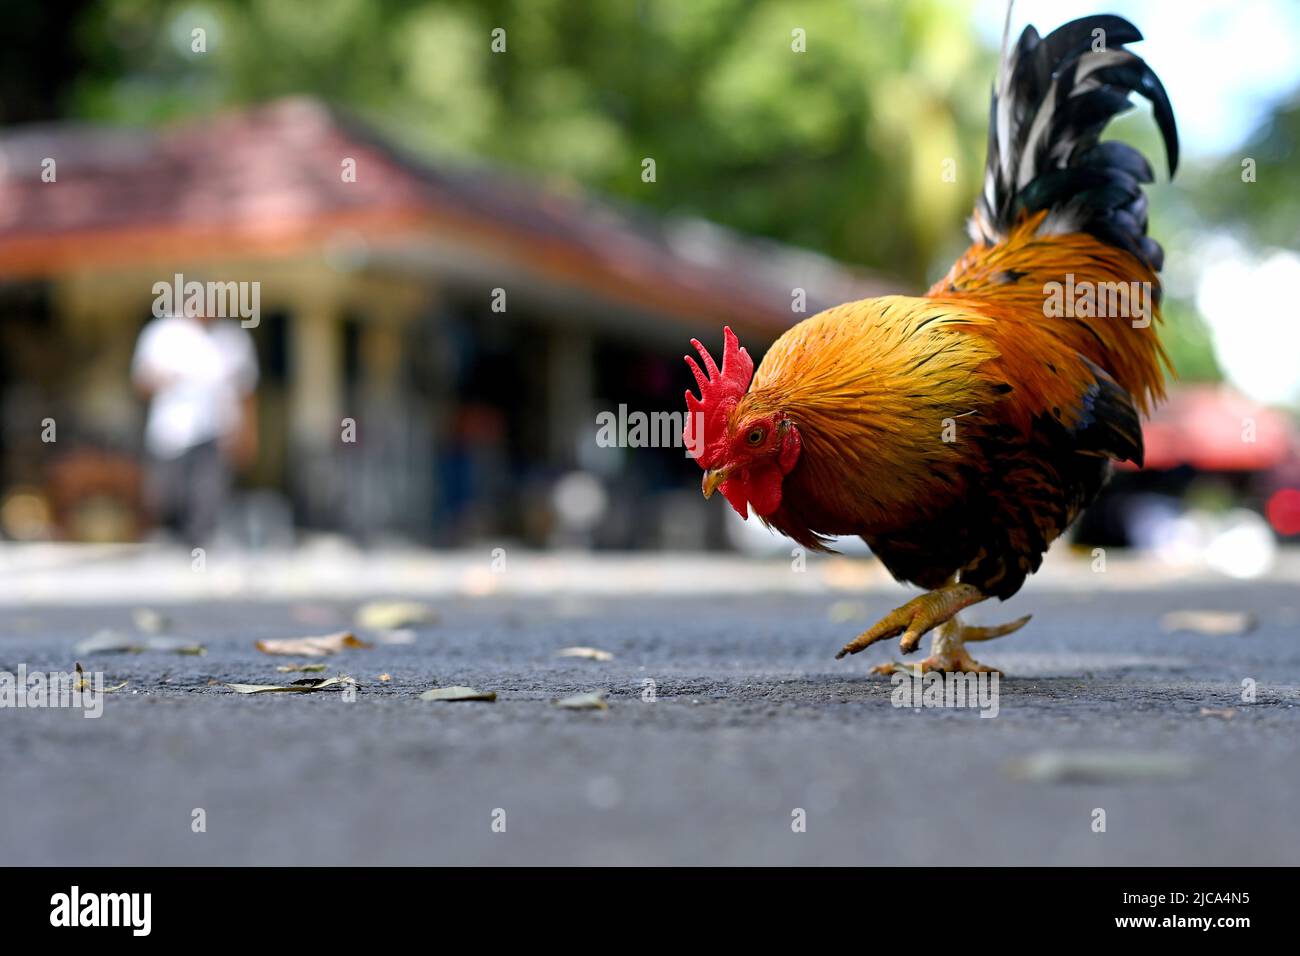 Yakarta, Indonesia. Gallo de gallo deambulando por las calles para comer. IMAGEN DE SAM BAGNALL Foto de stock